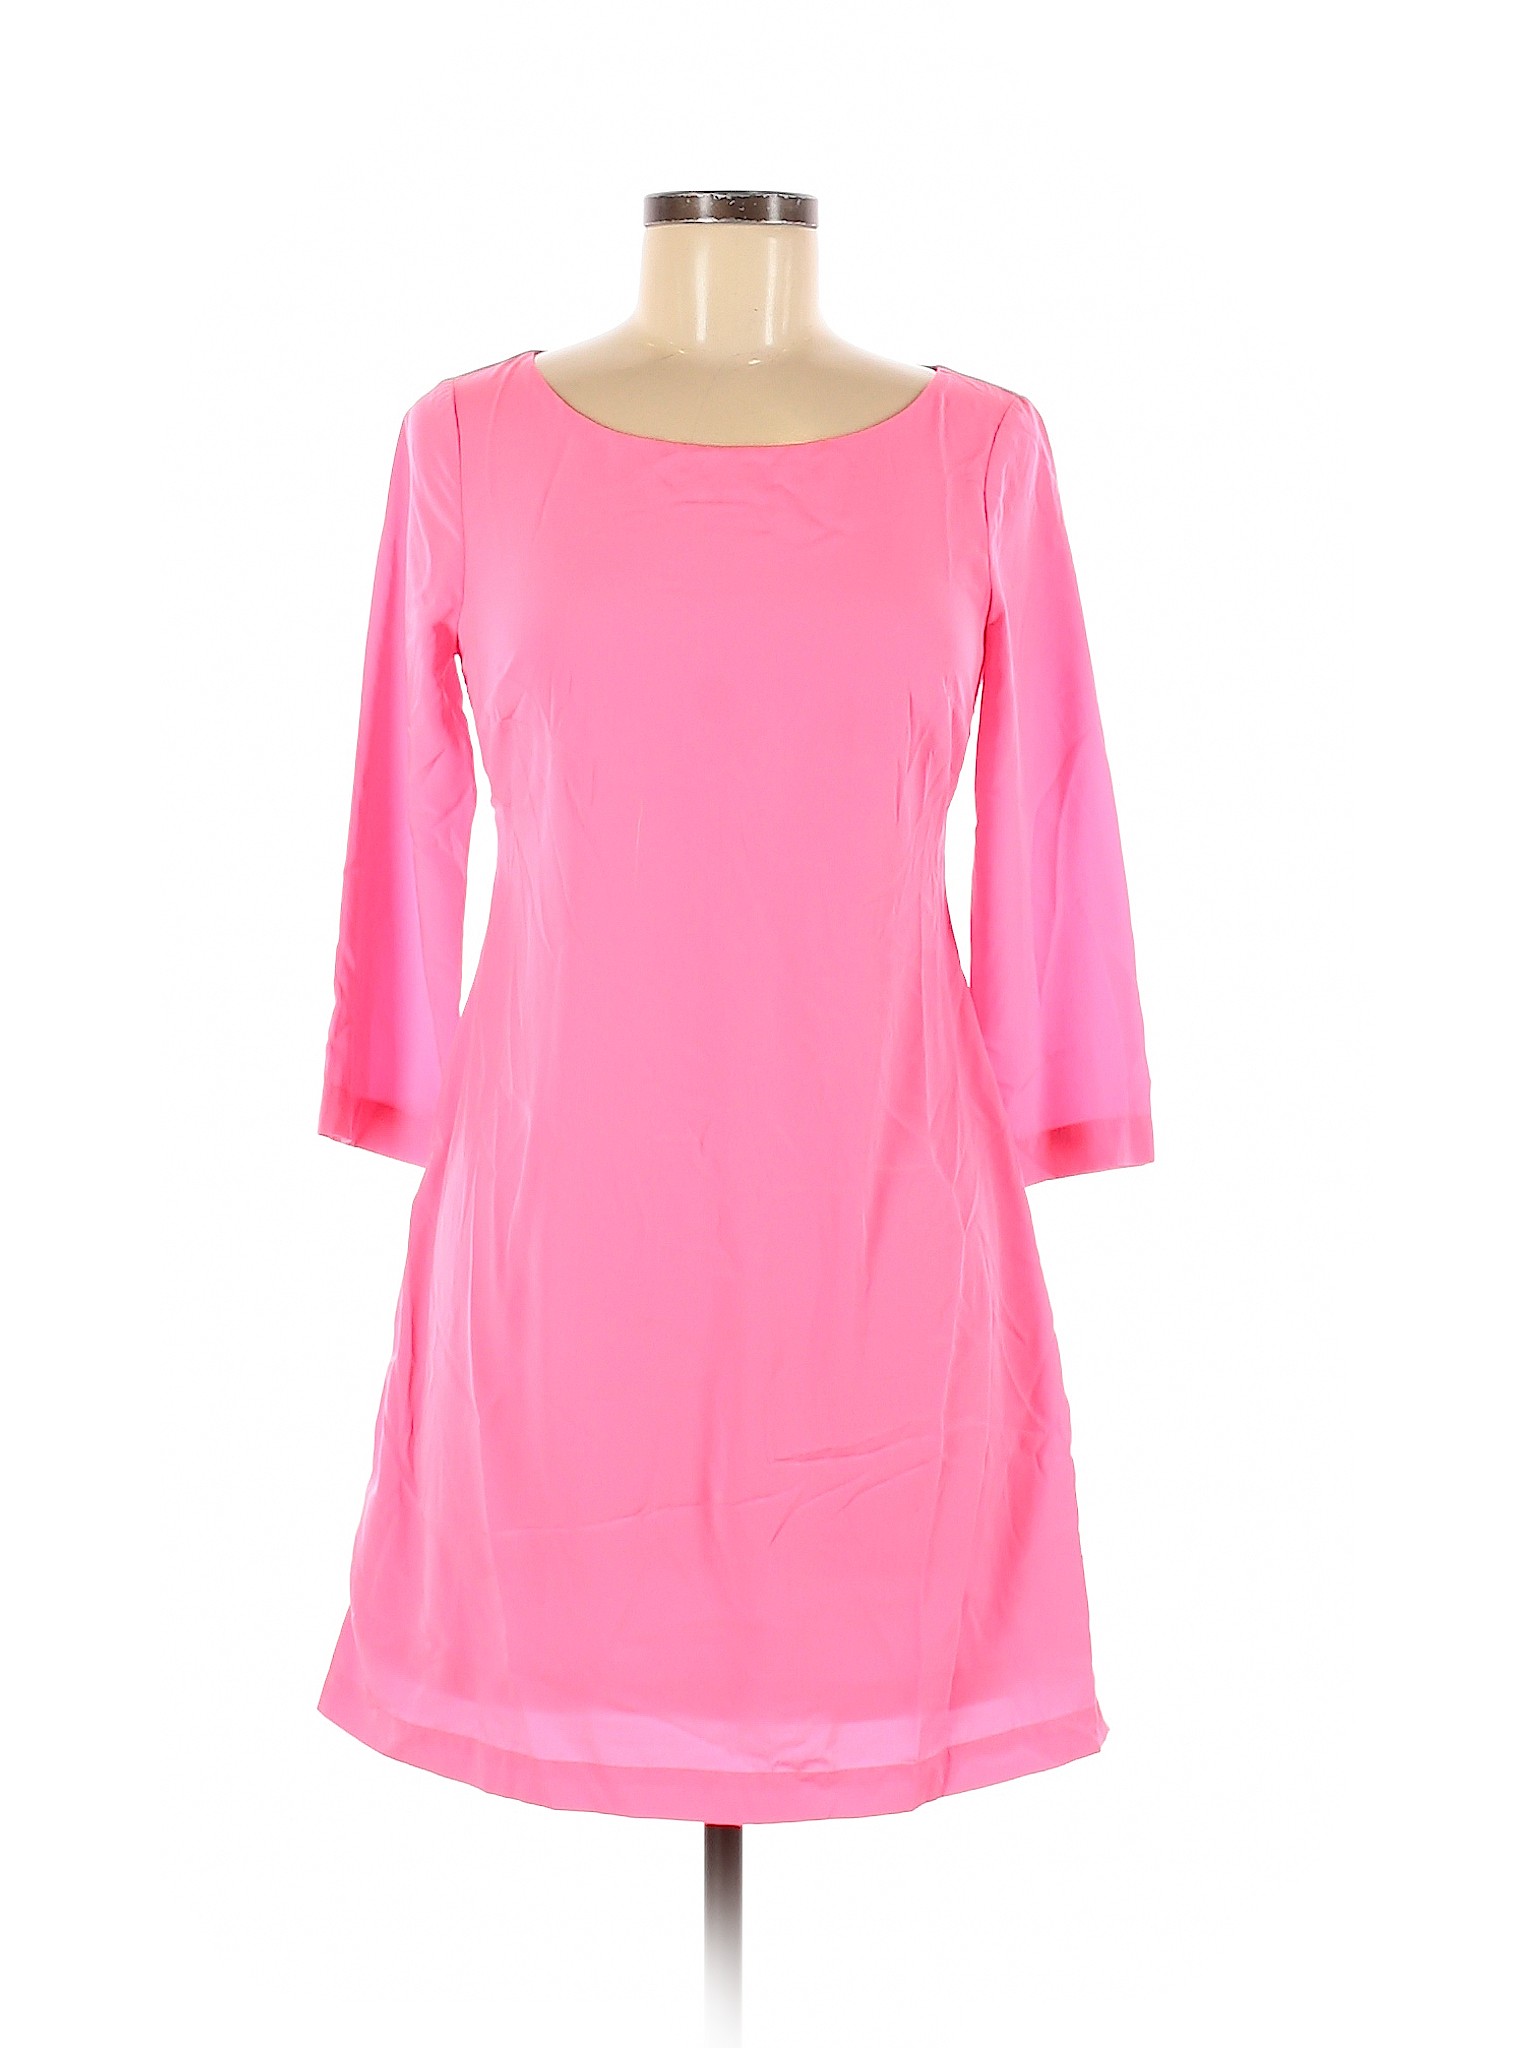 Old Navy Women Pink Casual Dress XS | eBay